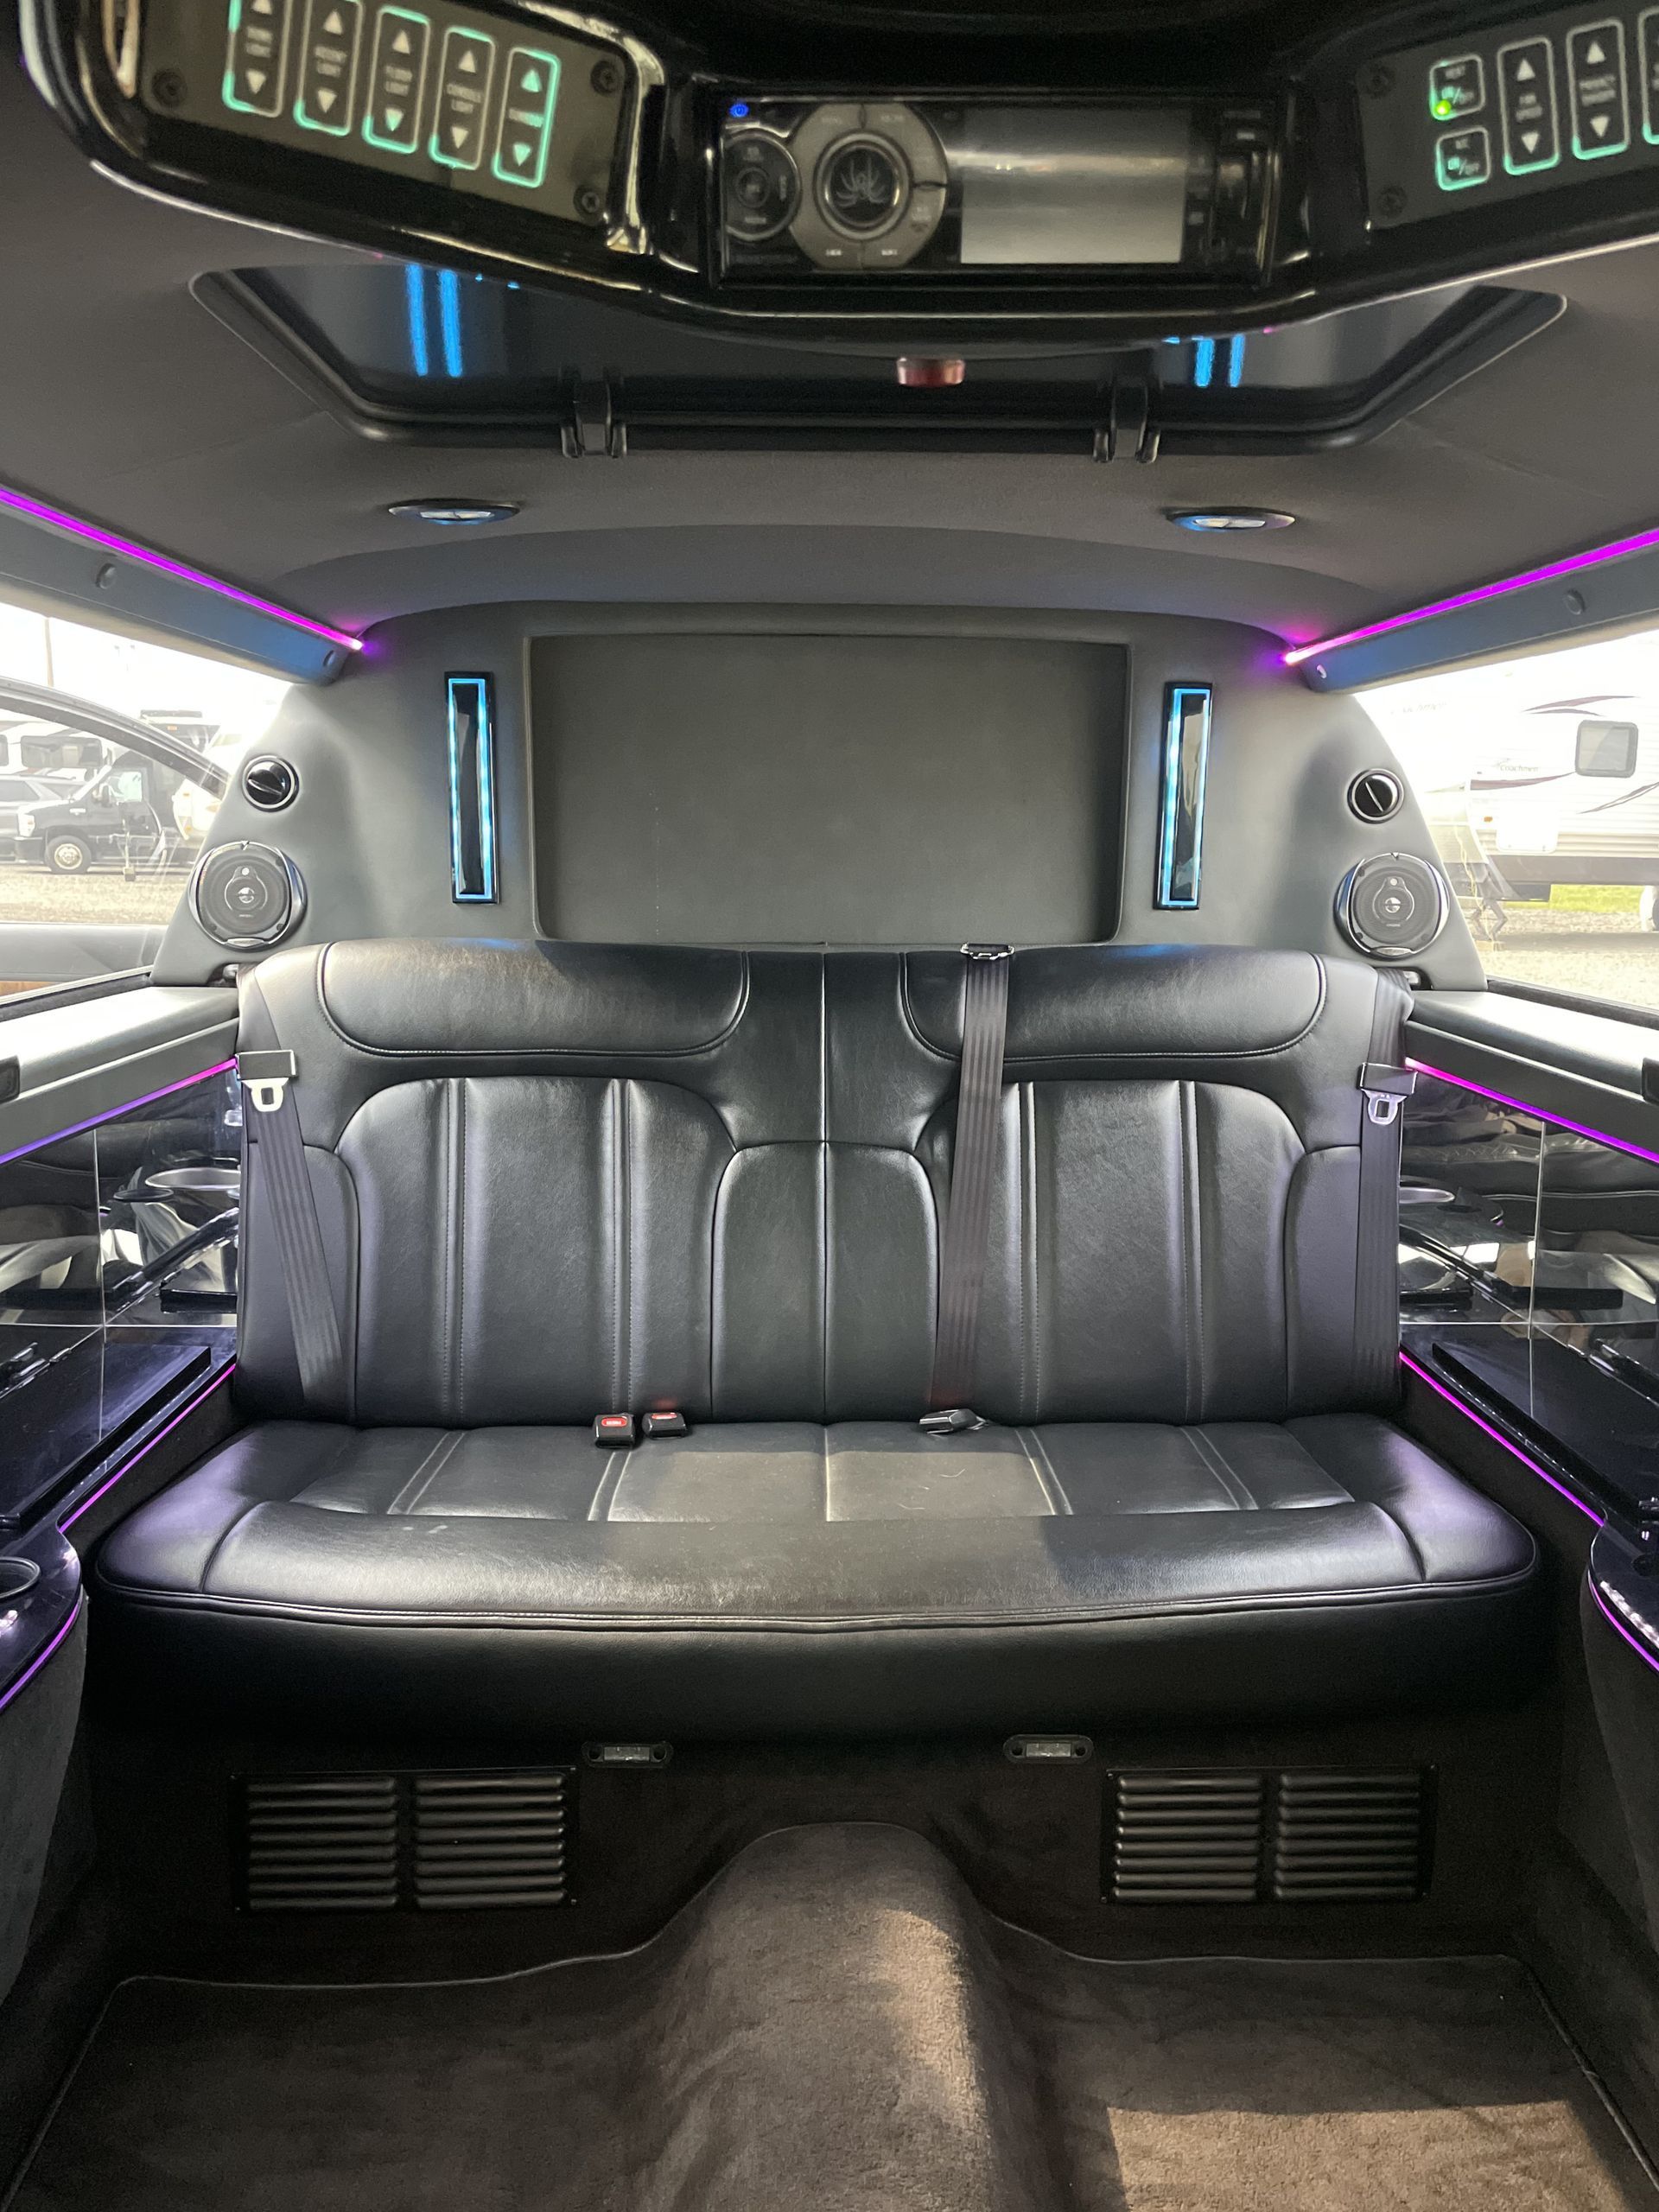 Lincoln MKT 6 passenger stretch limo interior